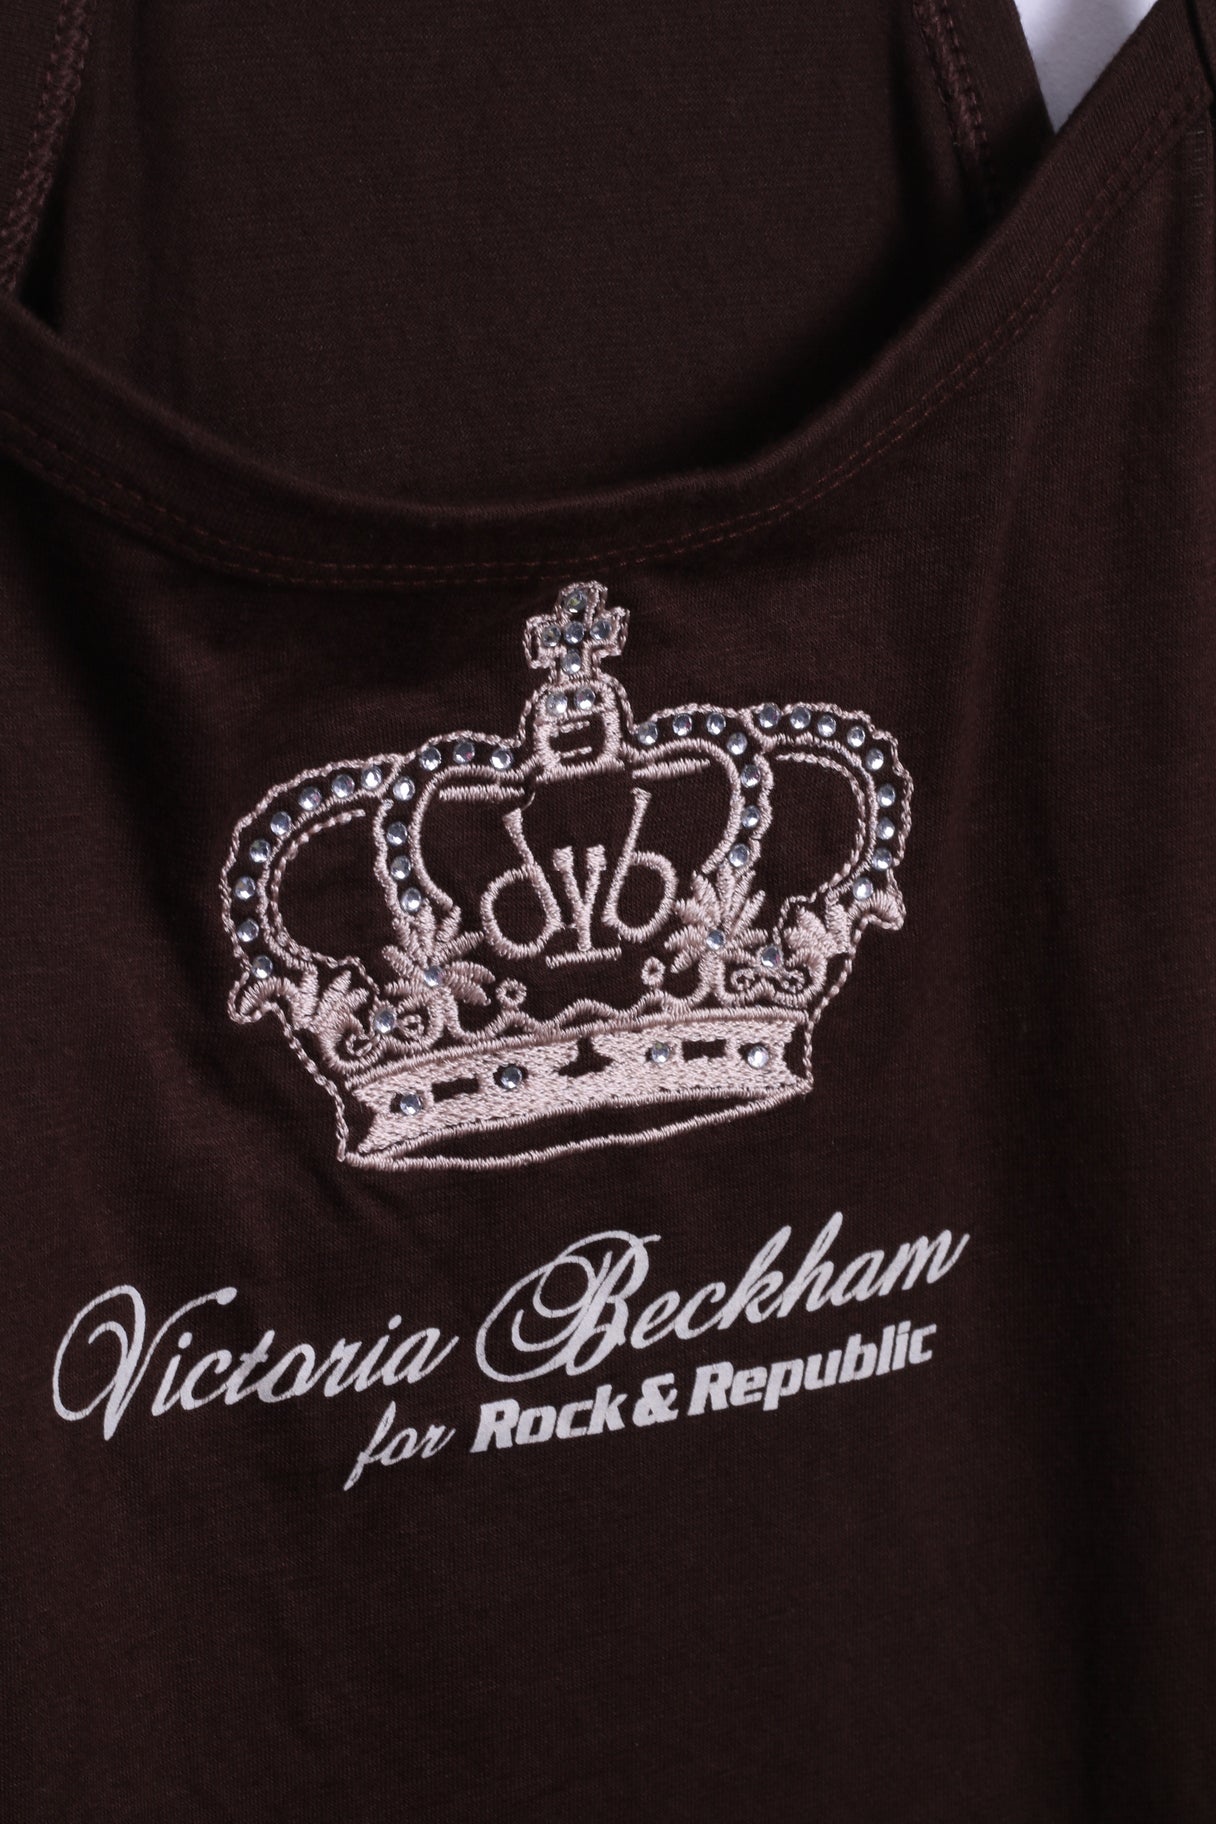 Victoria Beckham Womens XXL Short Tank Top Stretch Brown for Rock & Republic Sleeveless